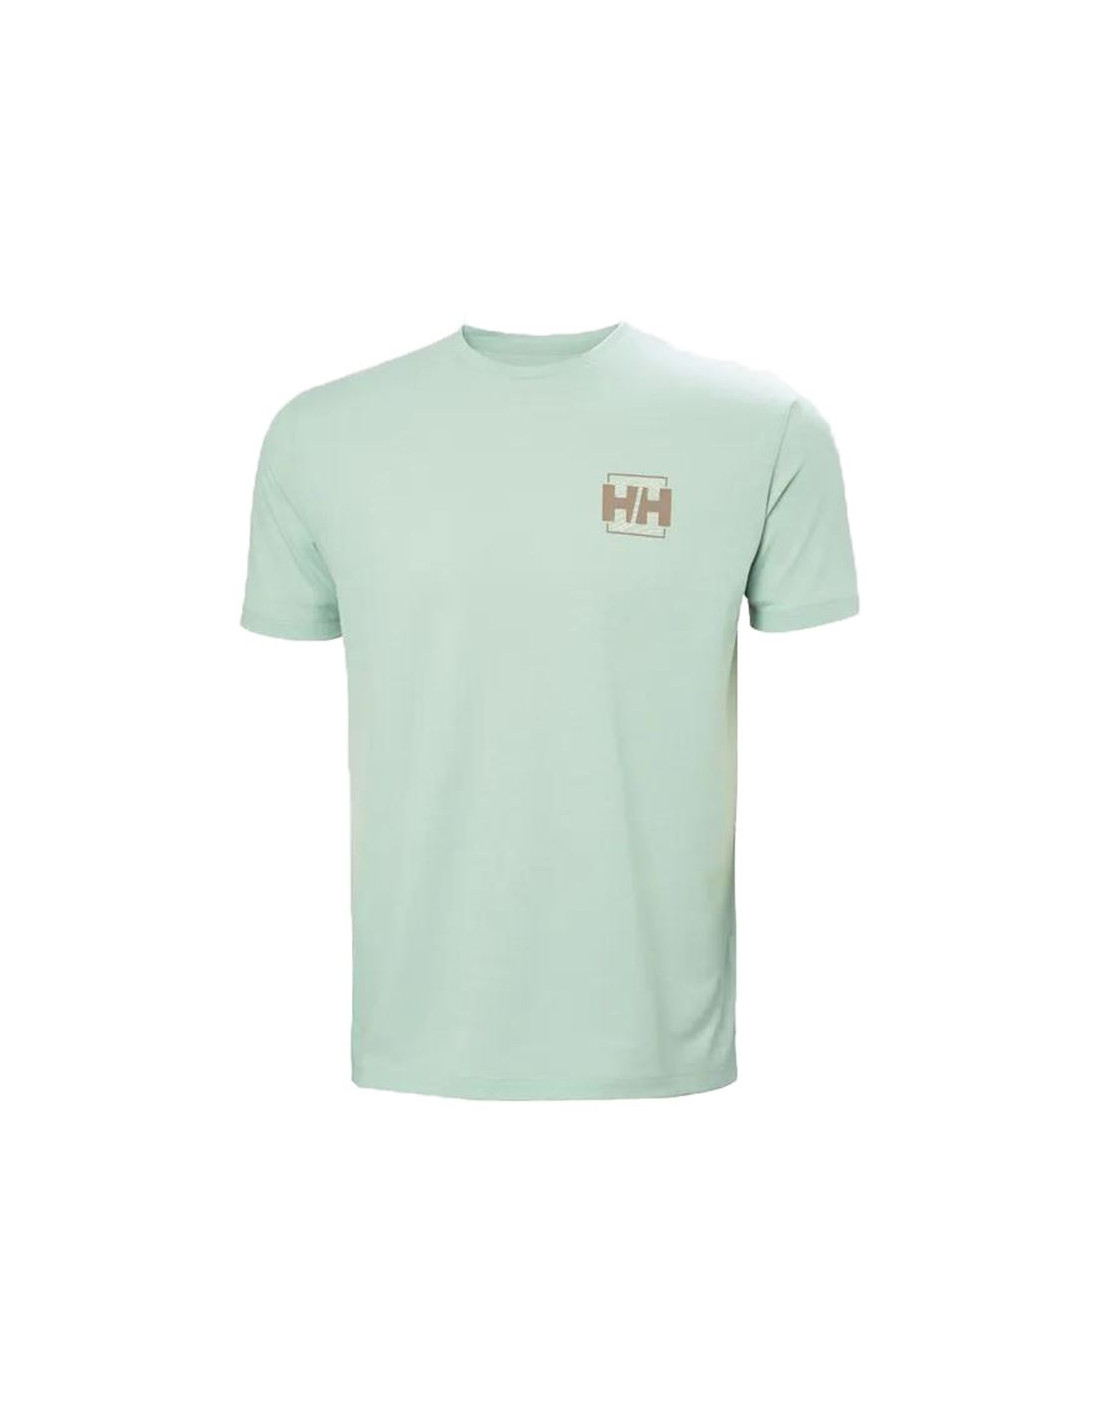 Camiseta Helly Hansen Logo verde hombre